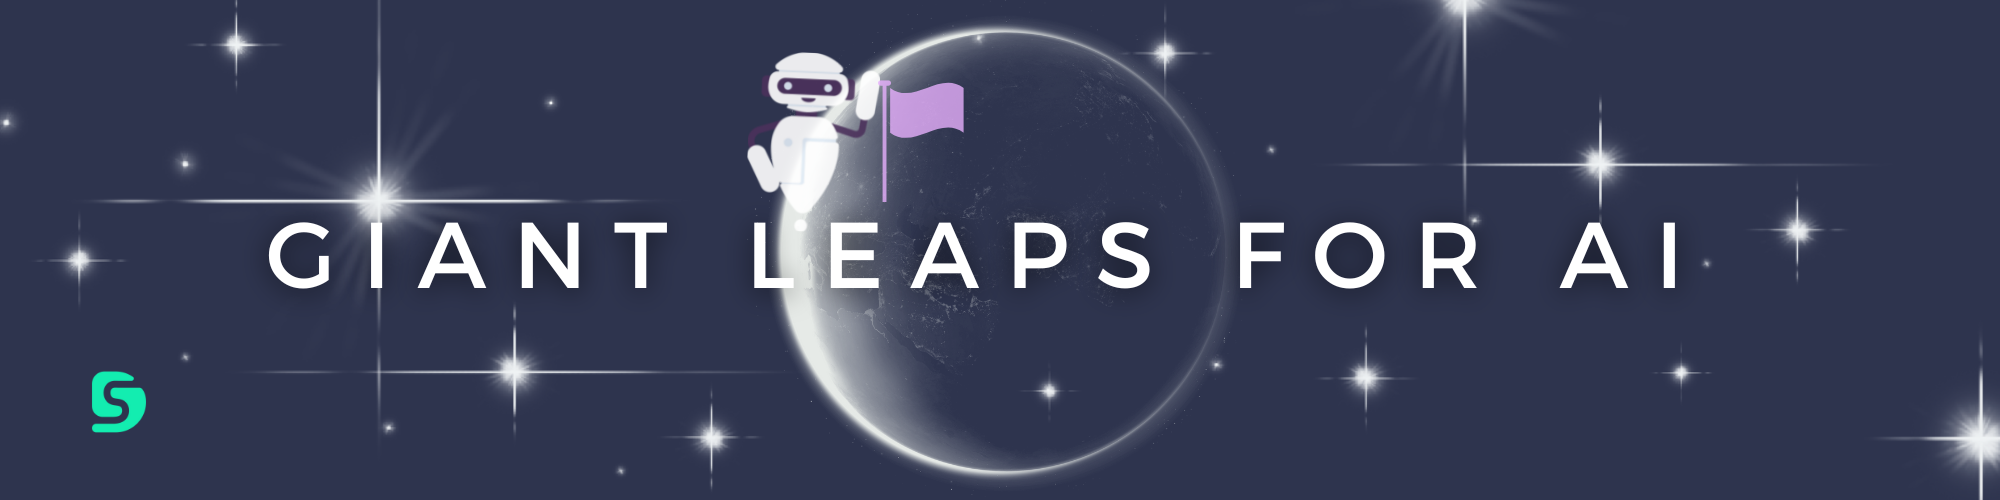 Giant Leaps For AI